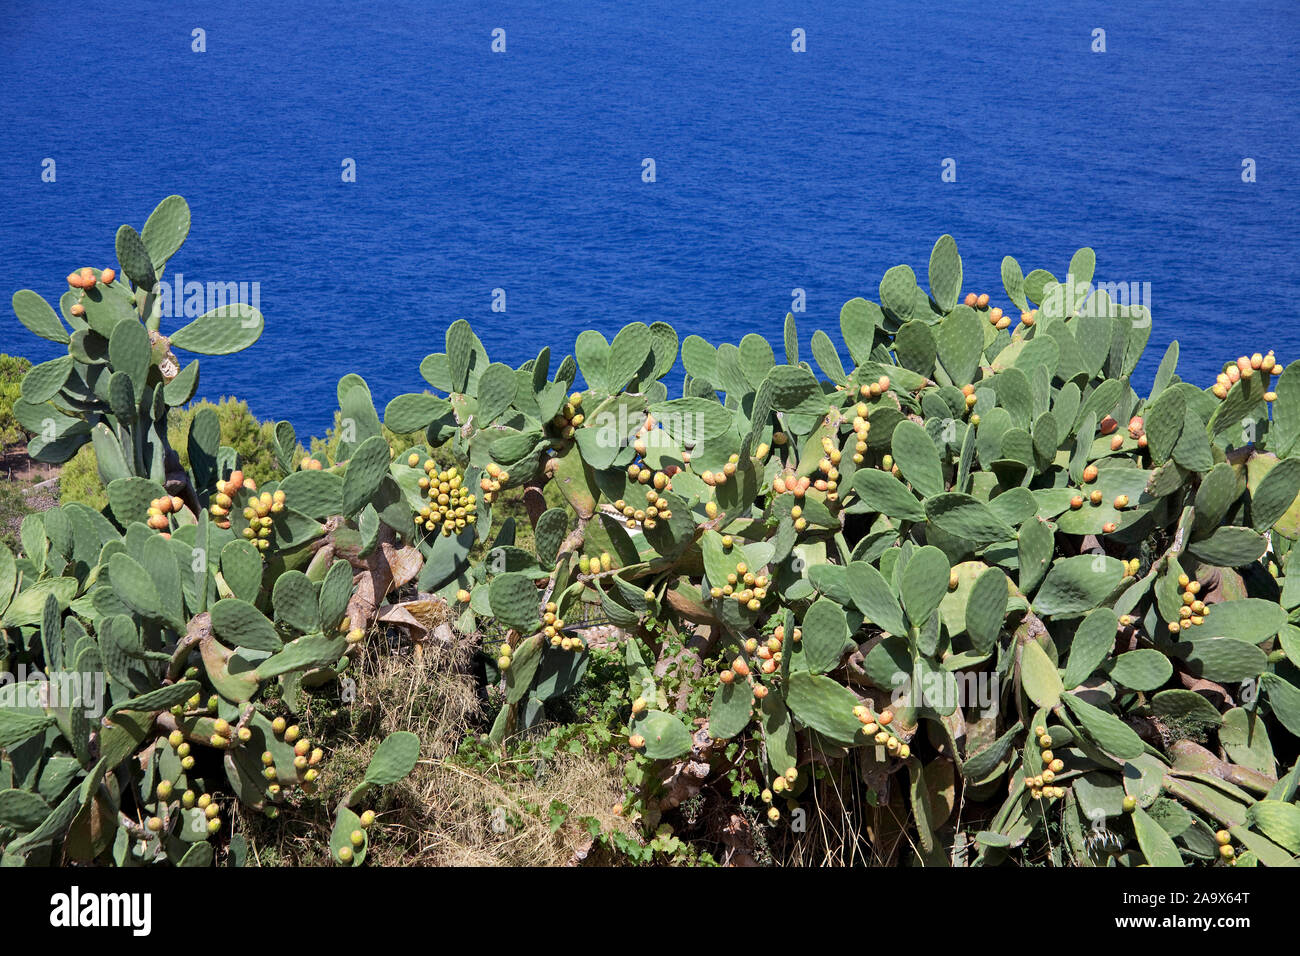 Figuiers de Barbarie (Opuntia ficus-indica), Banyalbufar, Majorque, îles Baléares, Espagne Banque D'Images